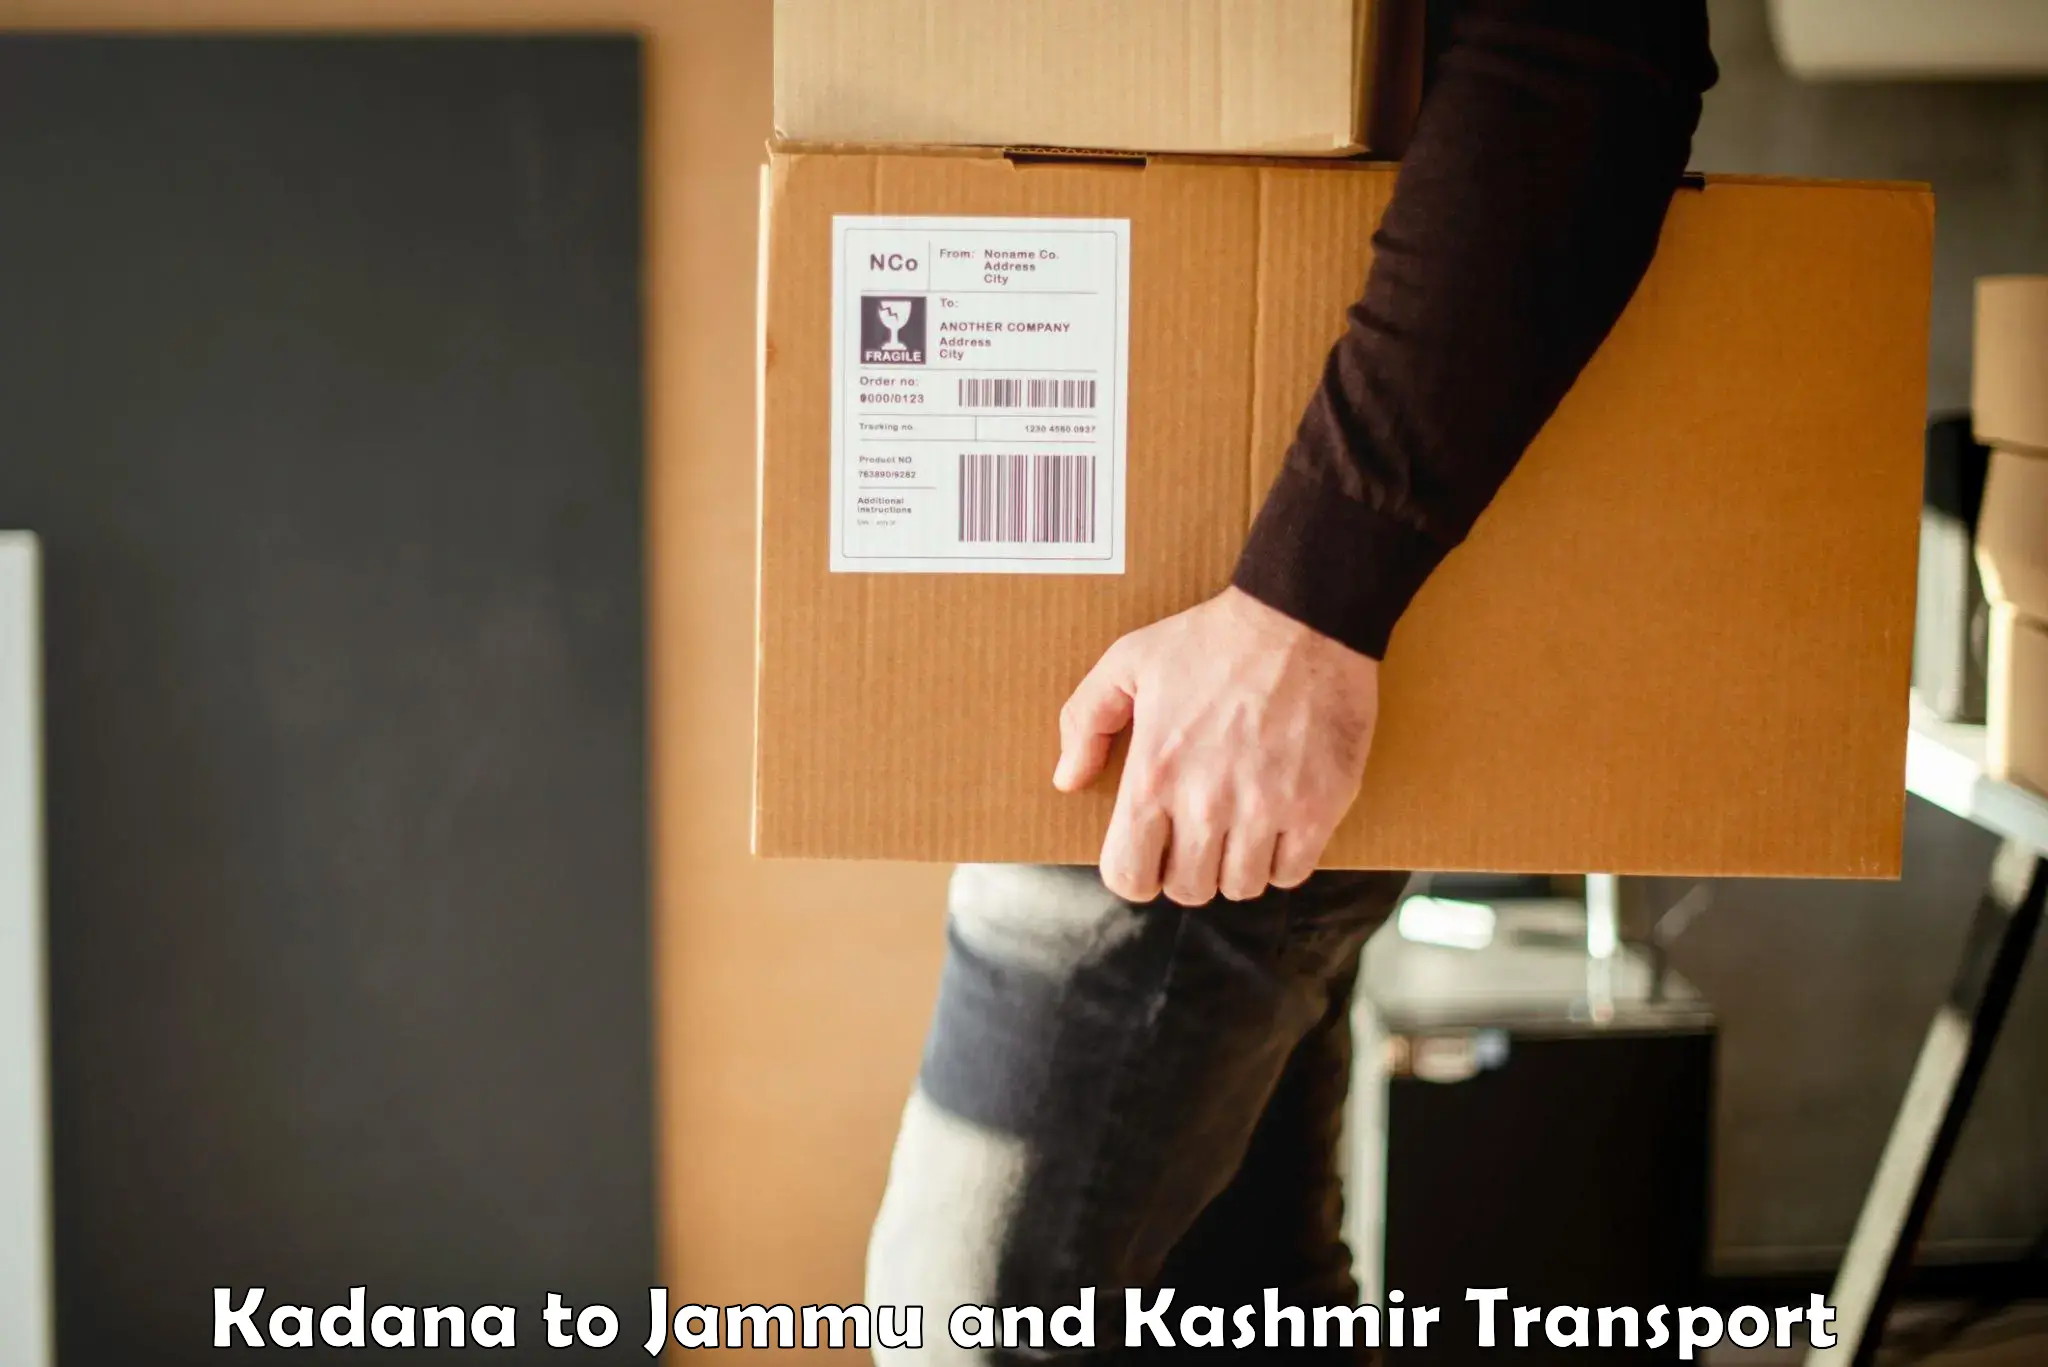 Truck transport companies in India Kadana to Jammu and Kashmir